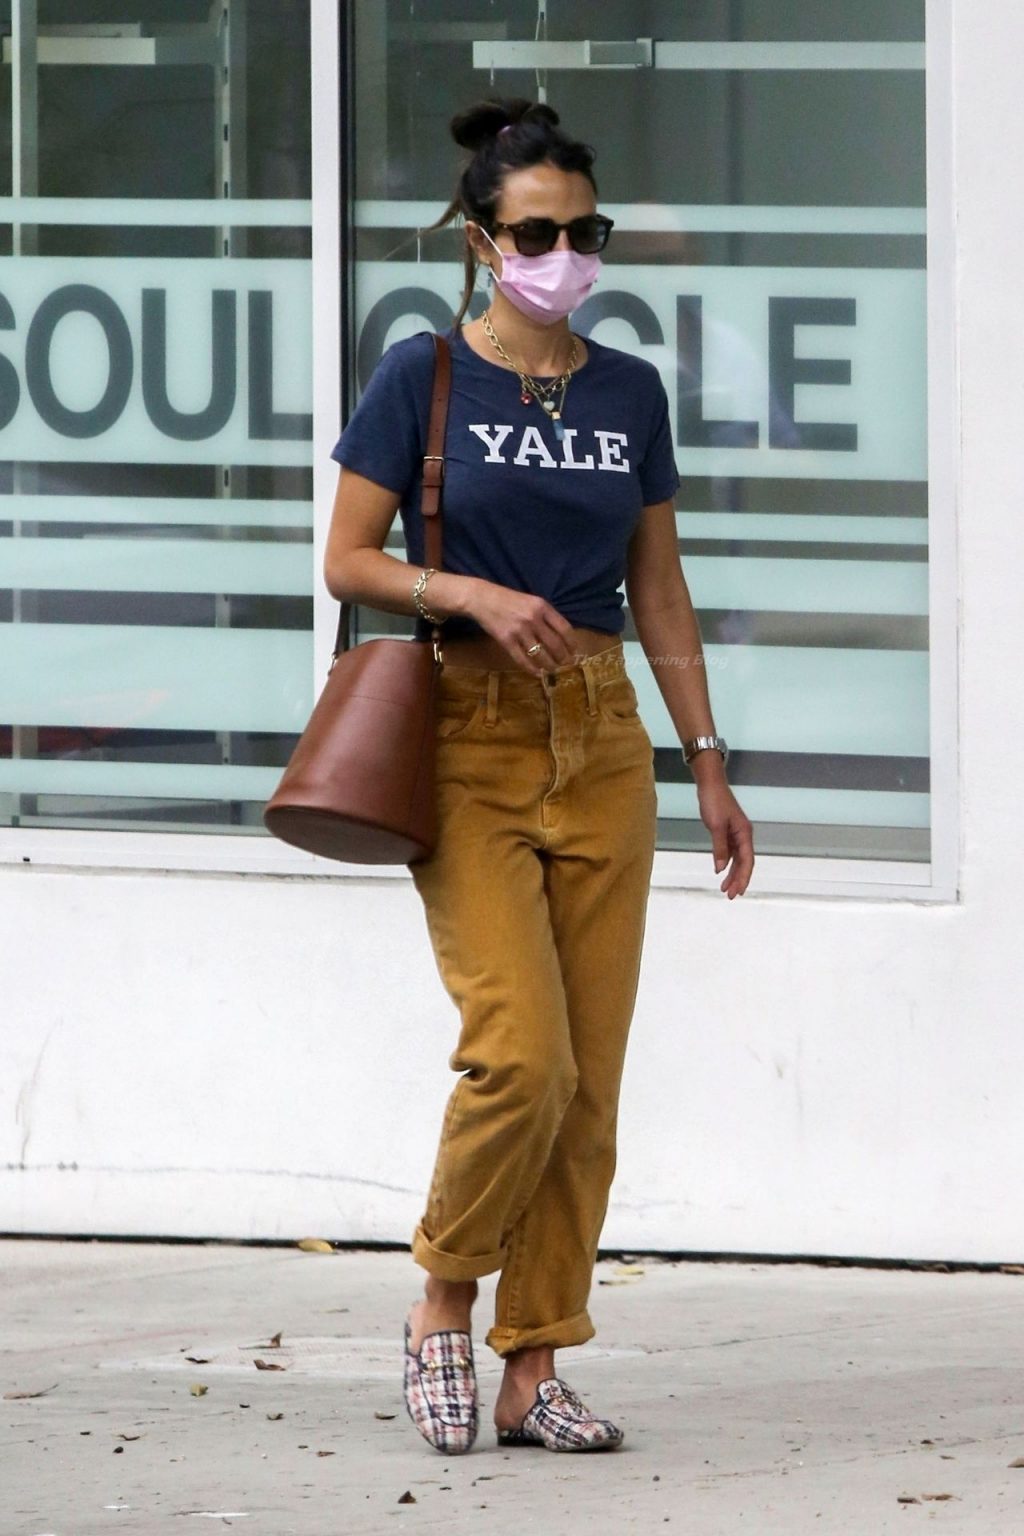 Jordana Brewster Wears Her Yale Spirit (5 Photos)